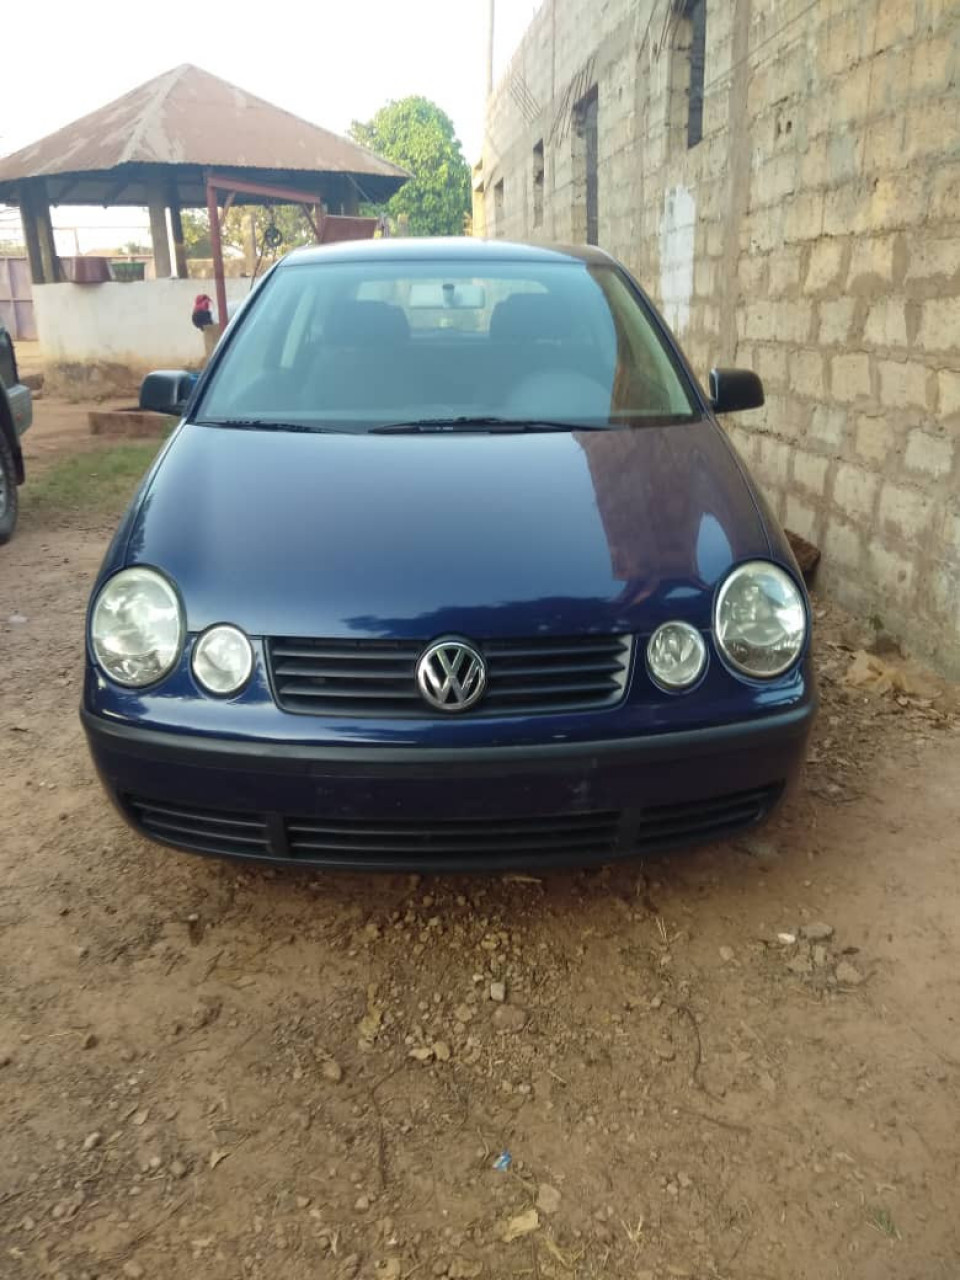 Volkswagen Polo, Carros, Bissau